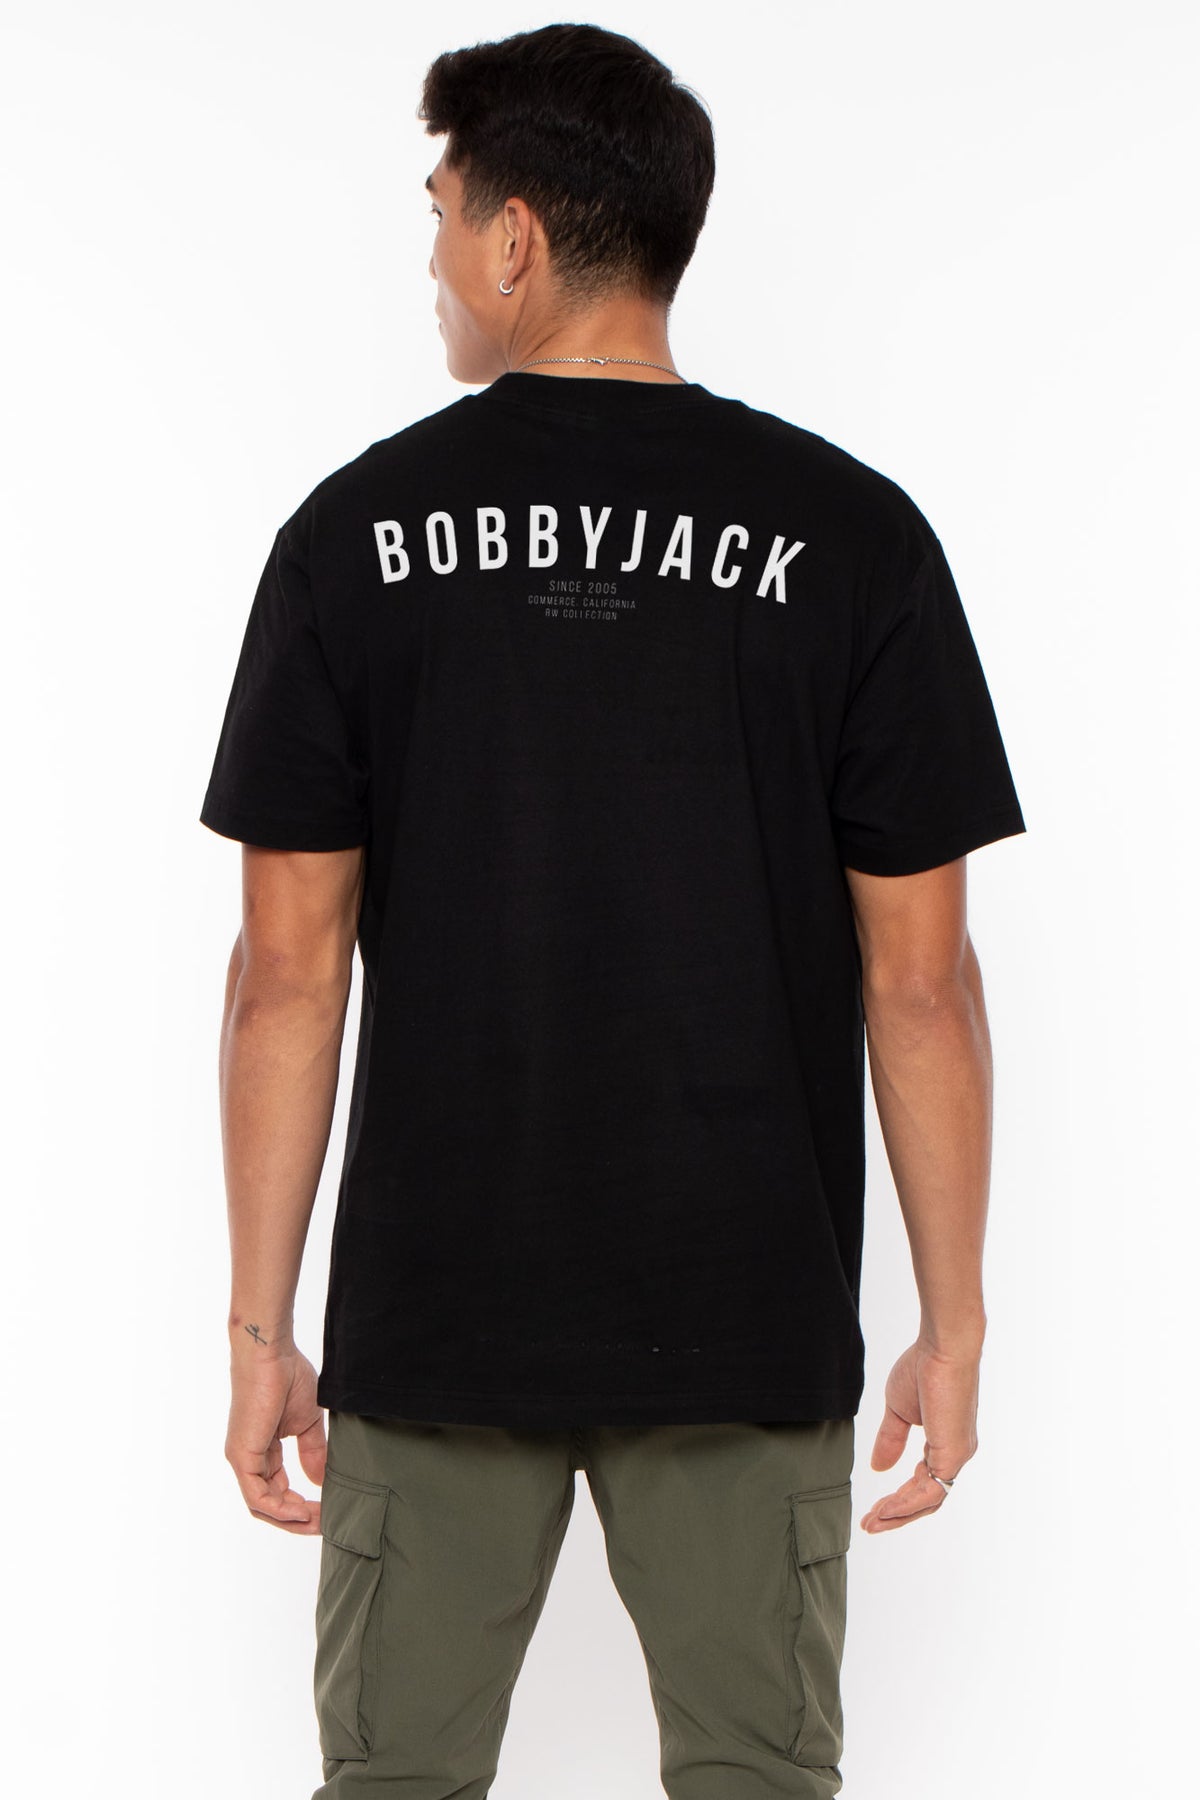 Your Booty  - Bobby Jack Men HW Shirt - Black